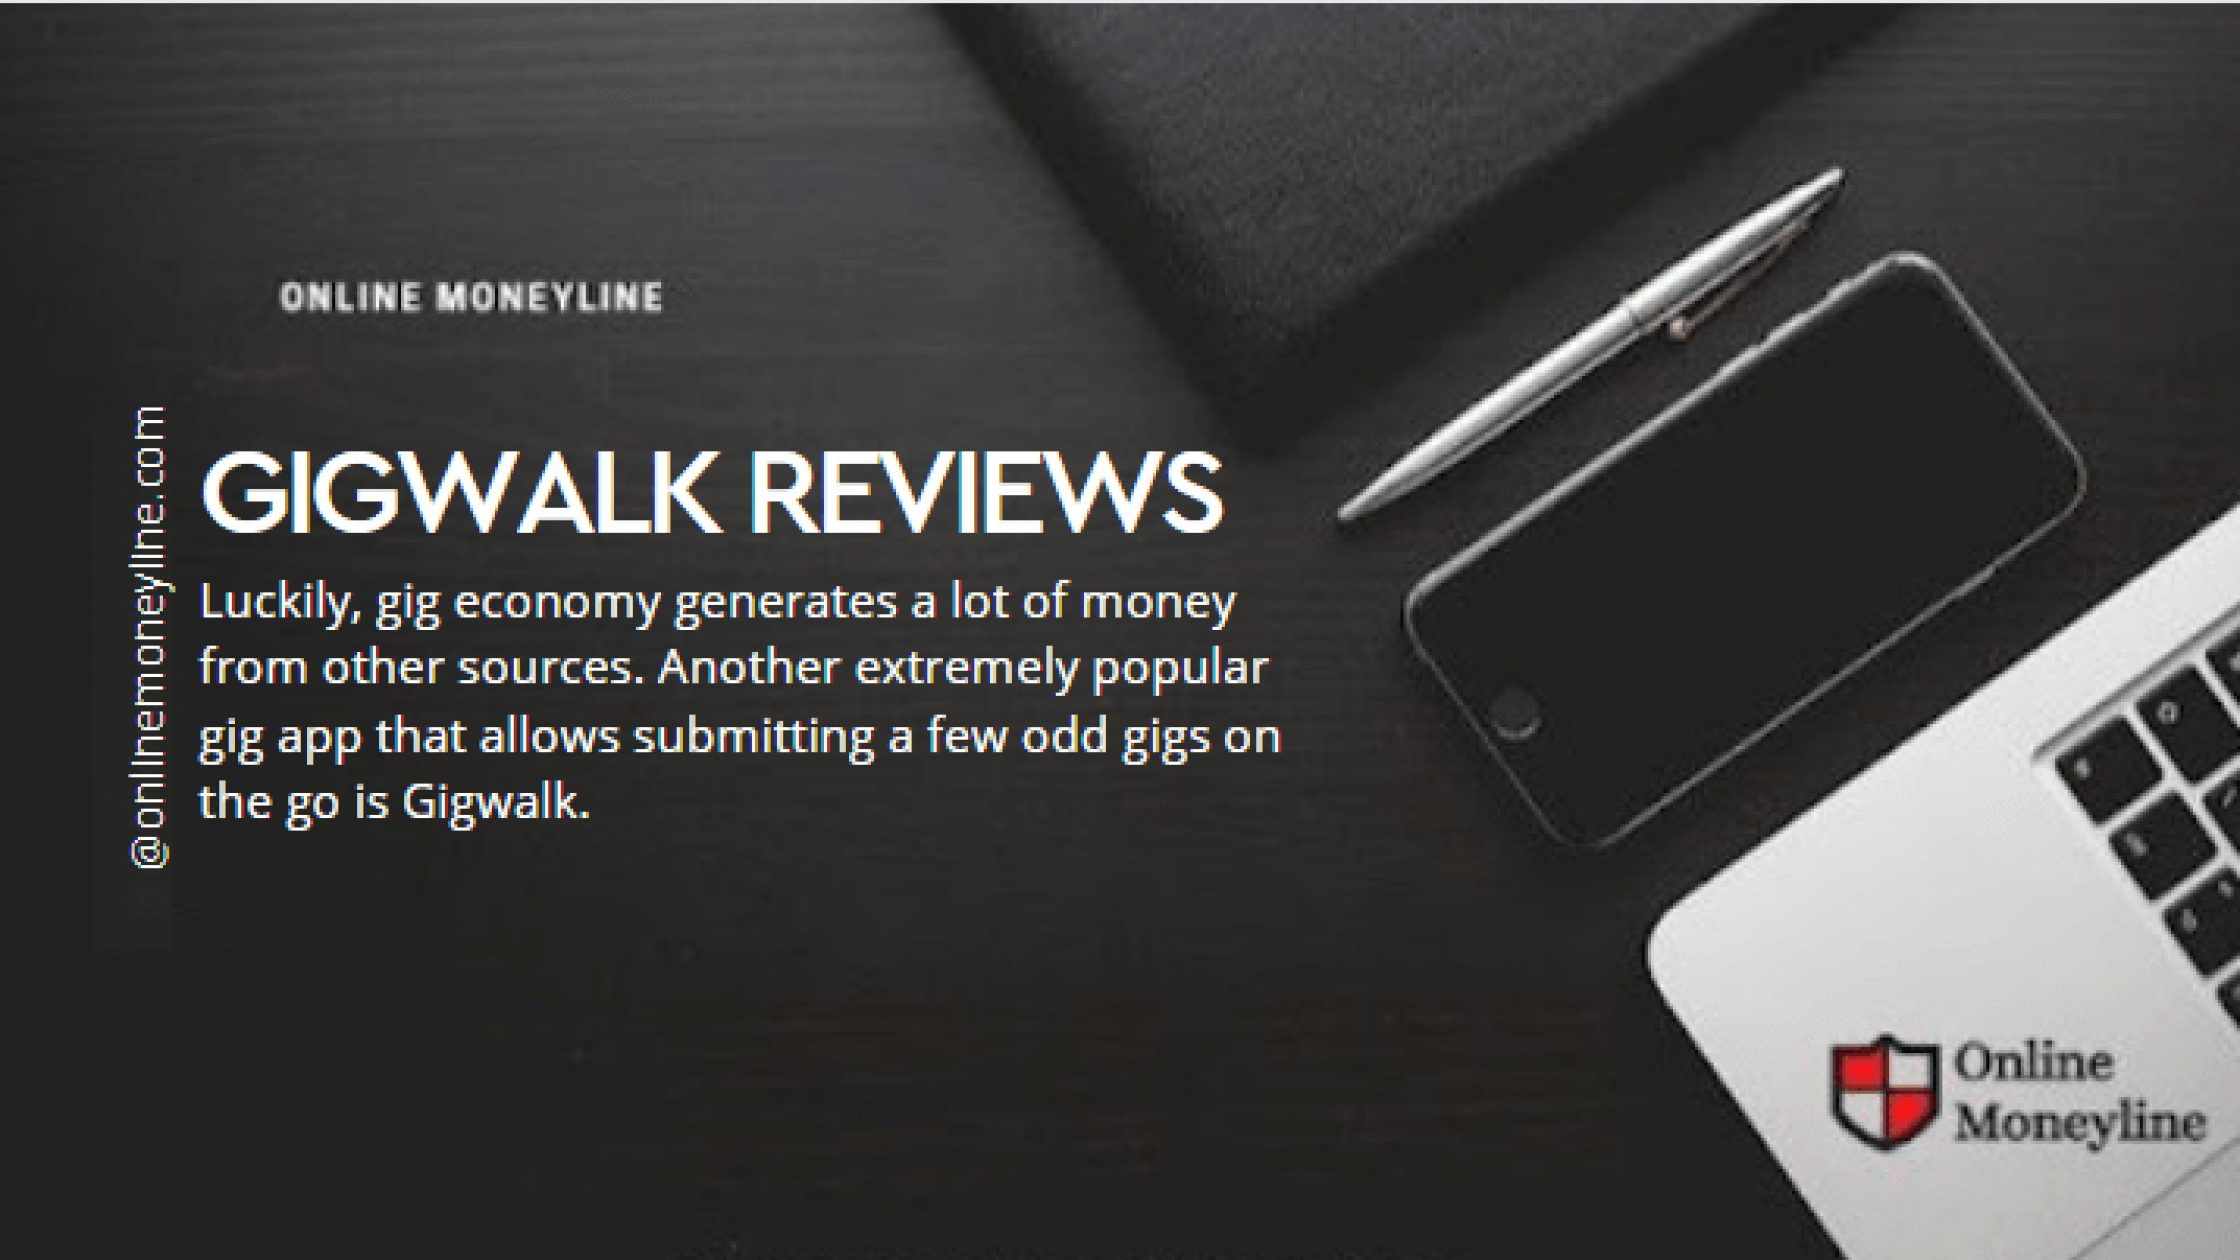 Gigwalk reviews